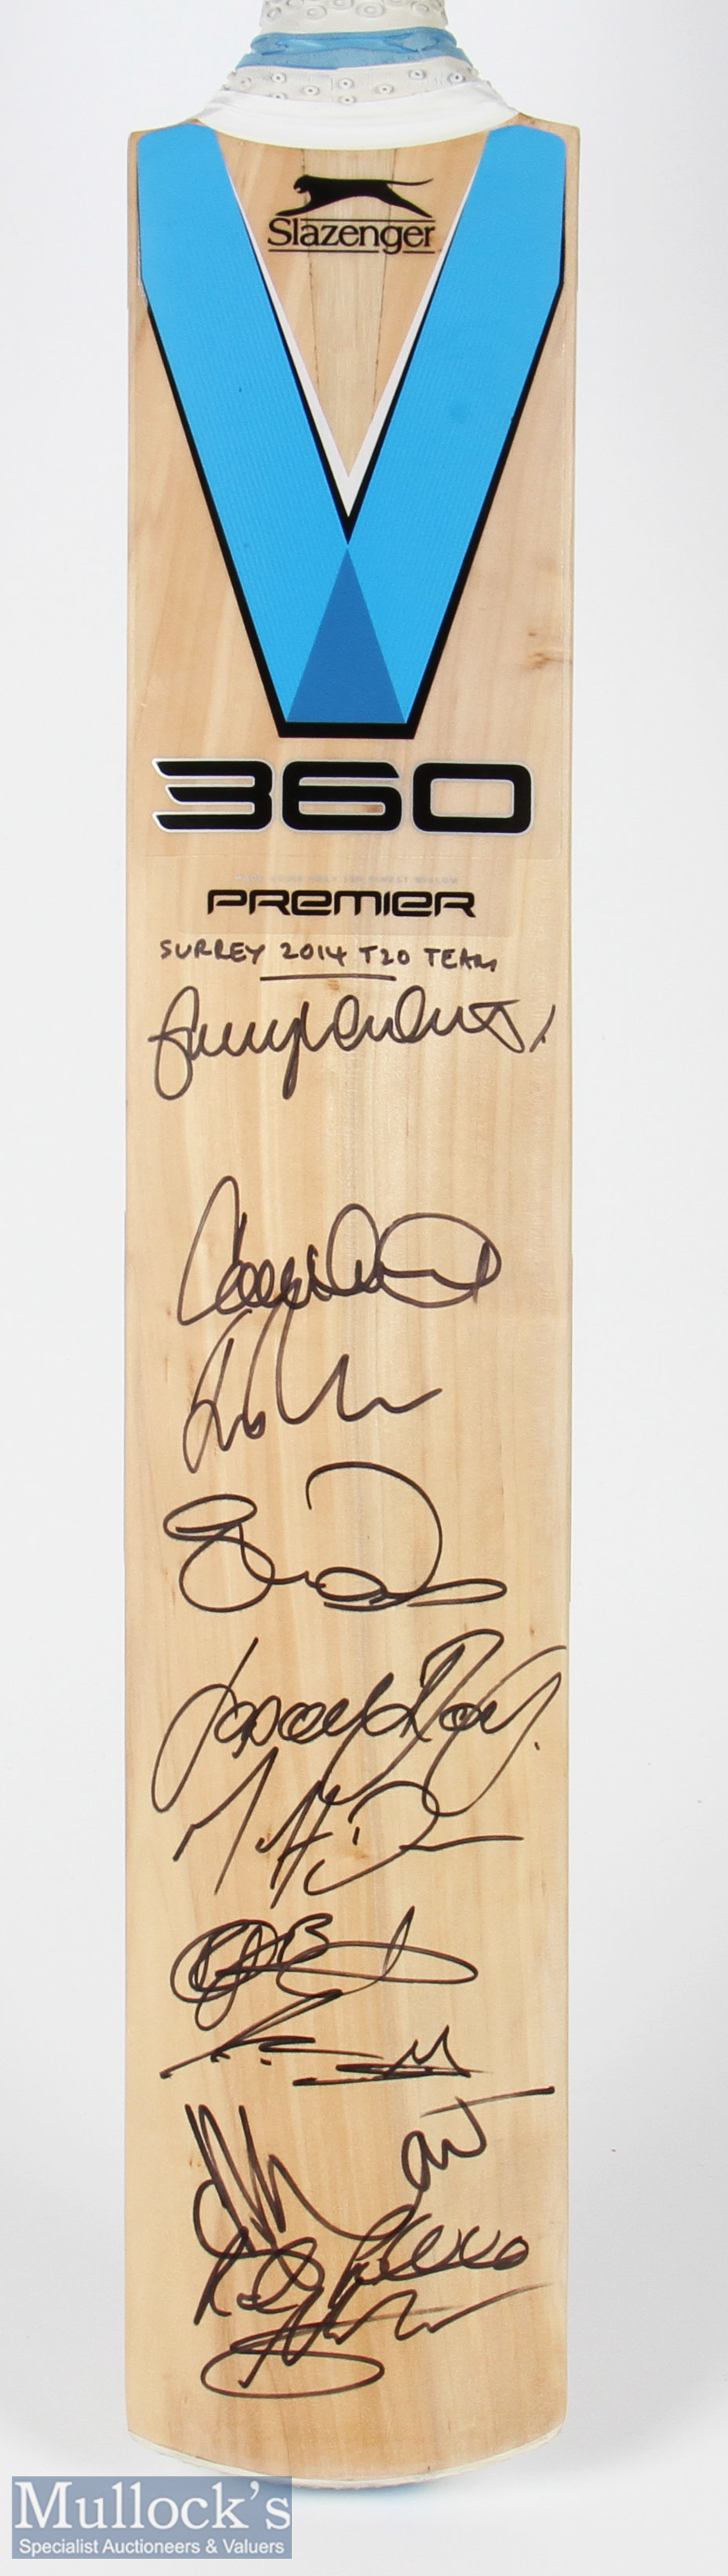 2014 Surrey T20 Team multi signed Slazenger Cricket bat, with 11 signatures on a Slazenger 360 - Image 2 of 2